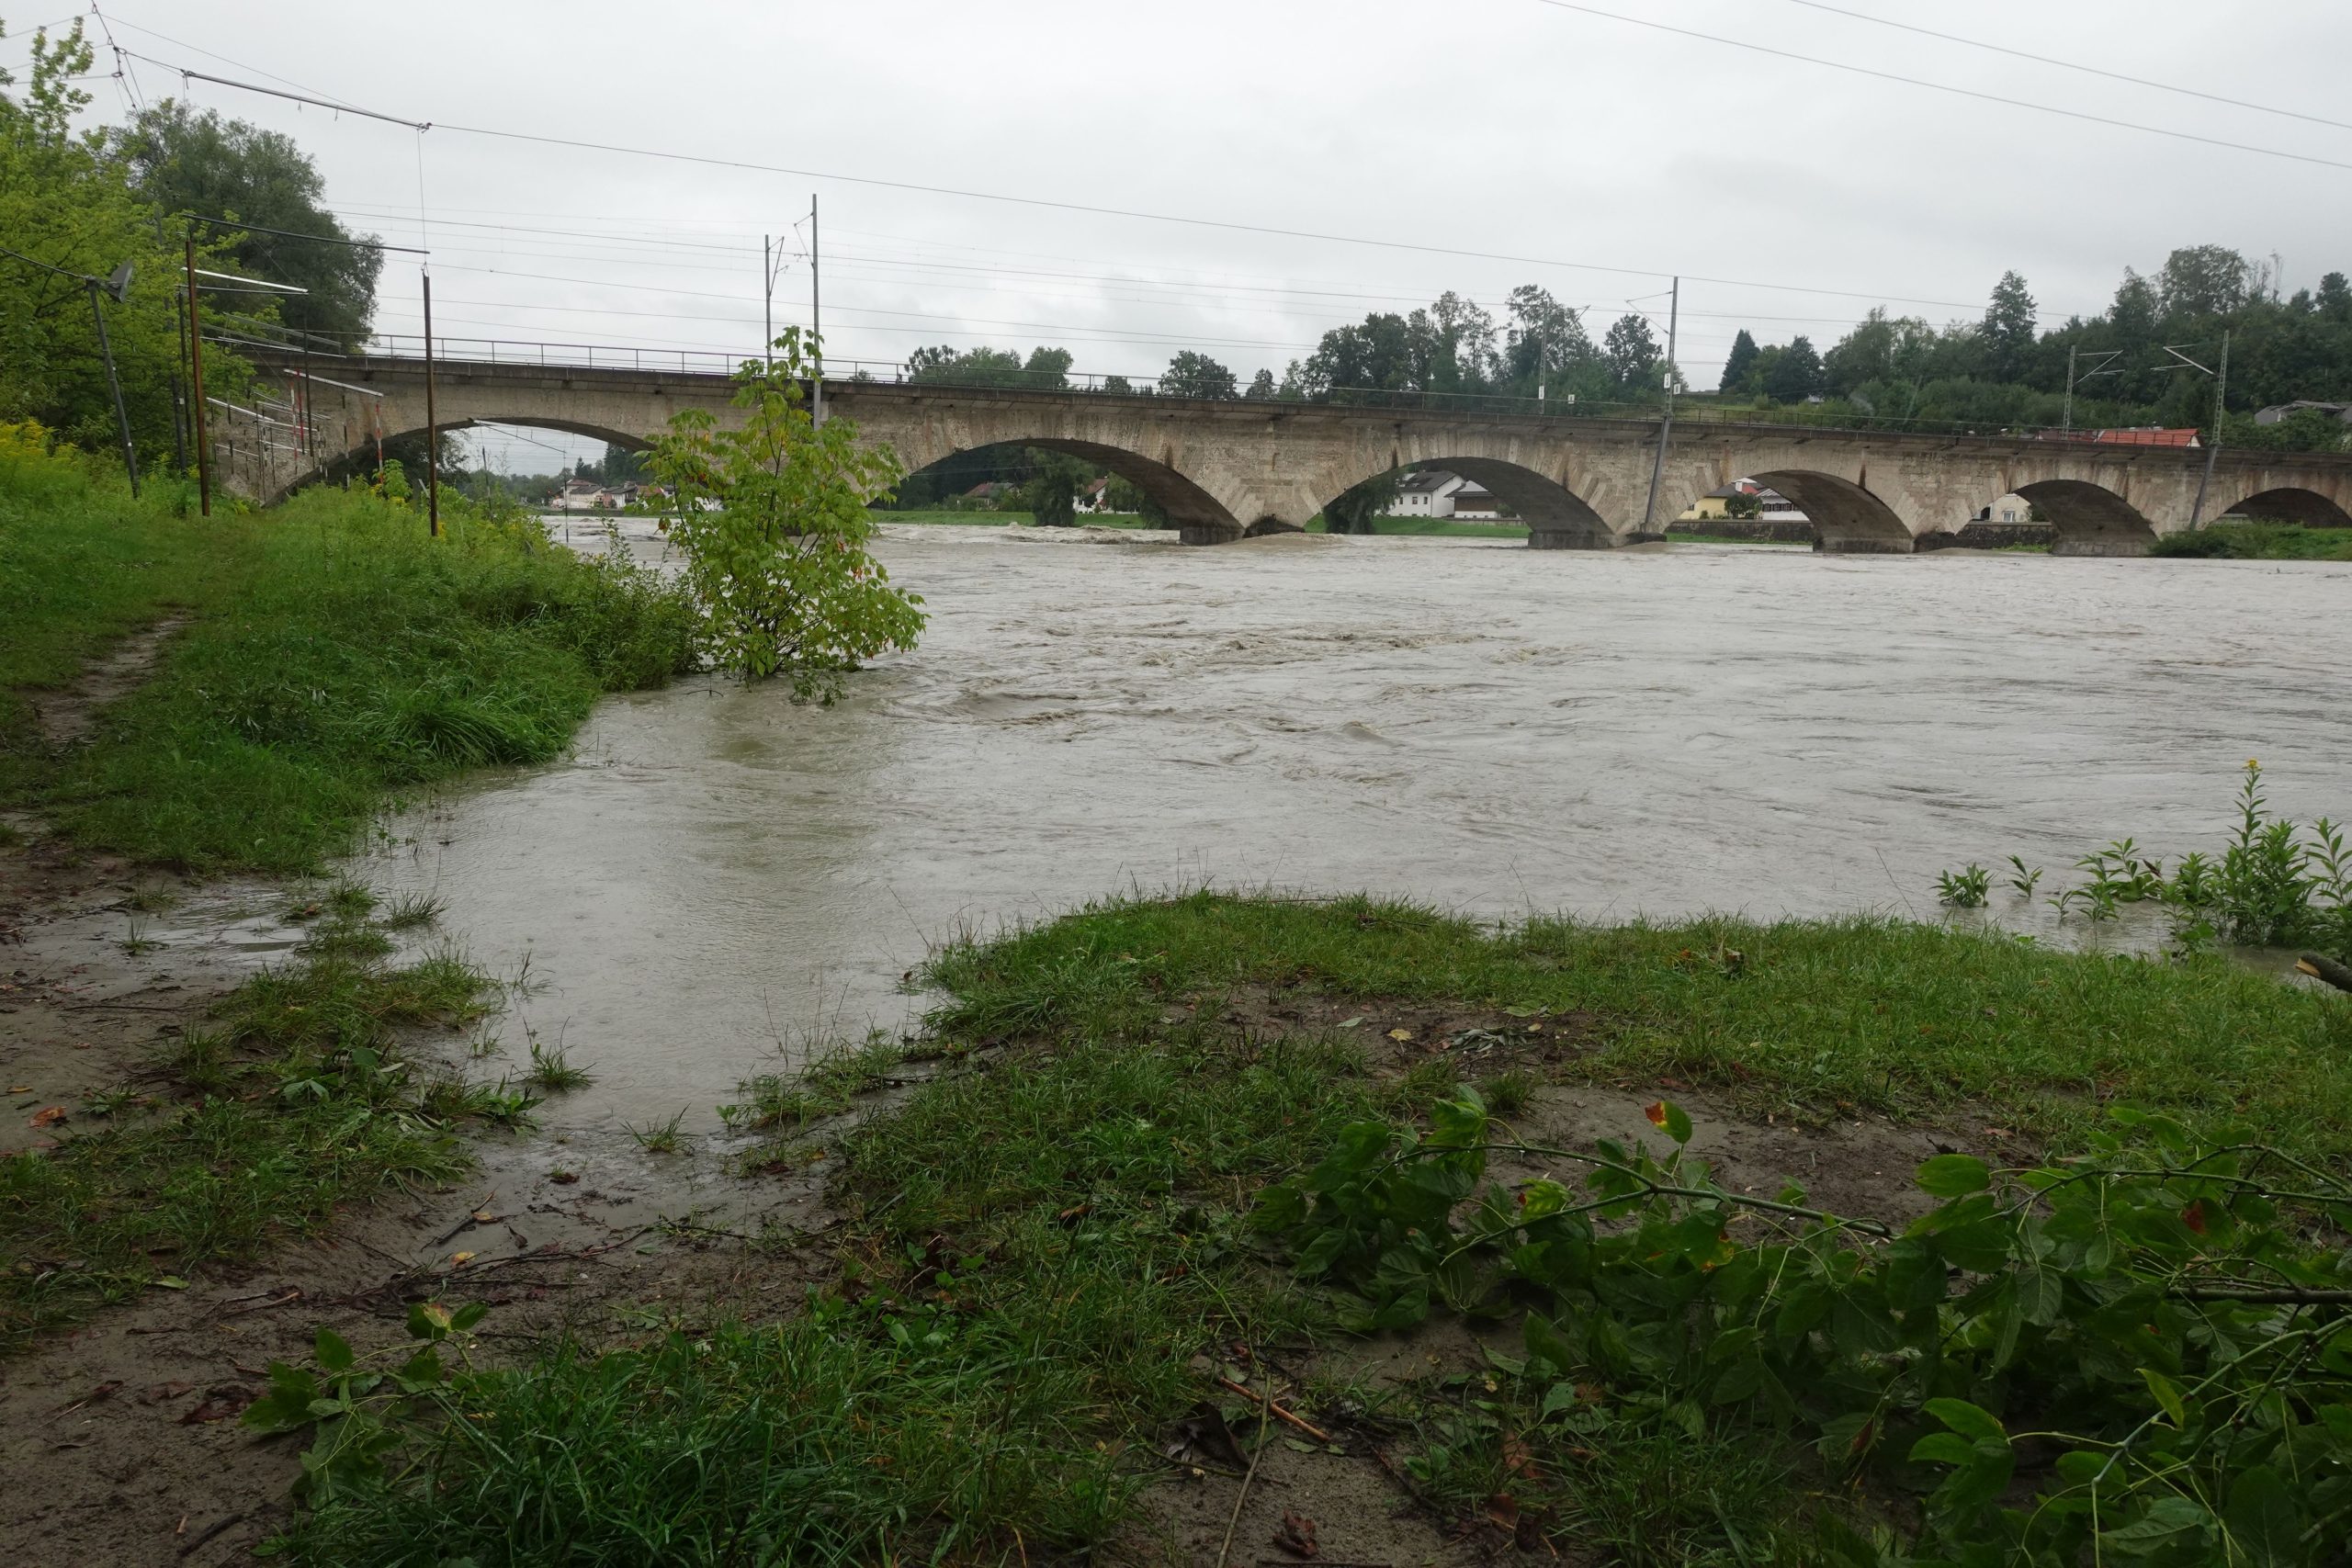 Hochwasser am Inn in Rosenheim. Blick zur Eisenbahnbrücke. Foto: Innpuls.me